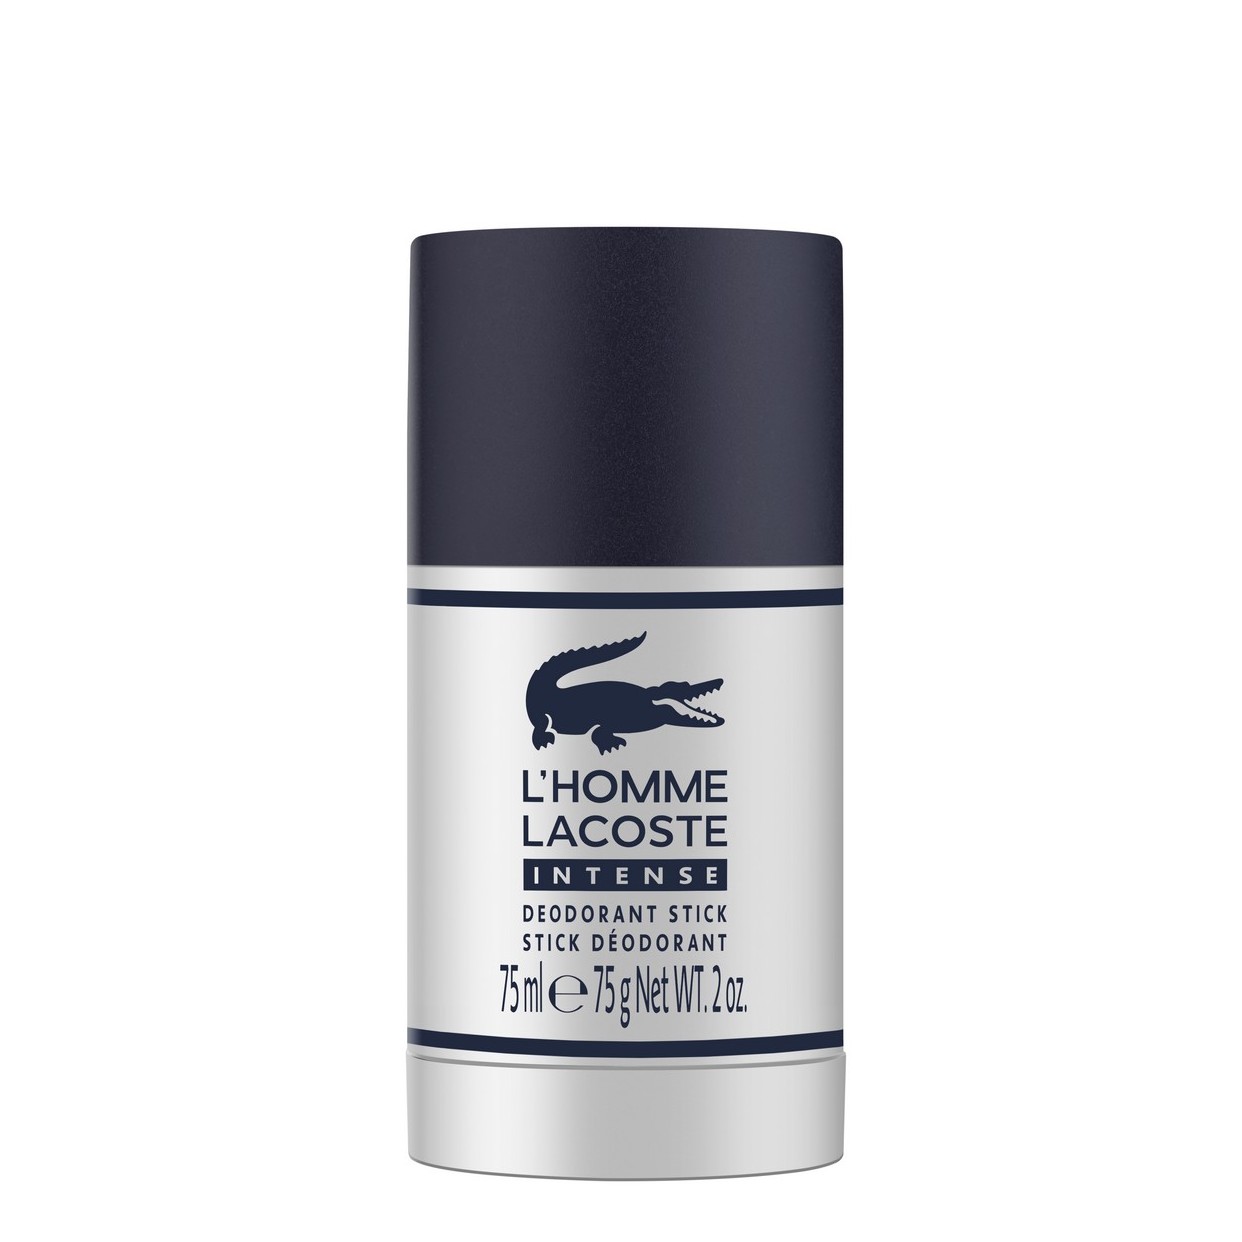 Lacoste L'Homme Lacoste Intense Deodorant Stick 75ml